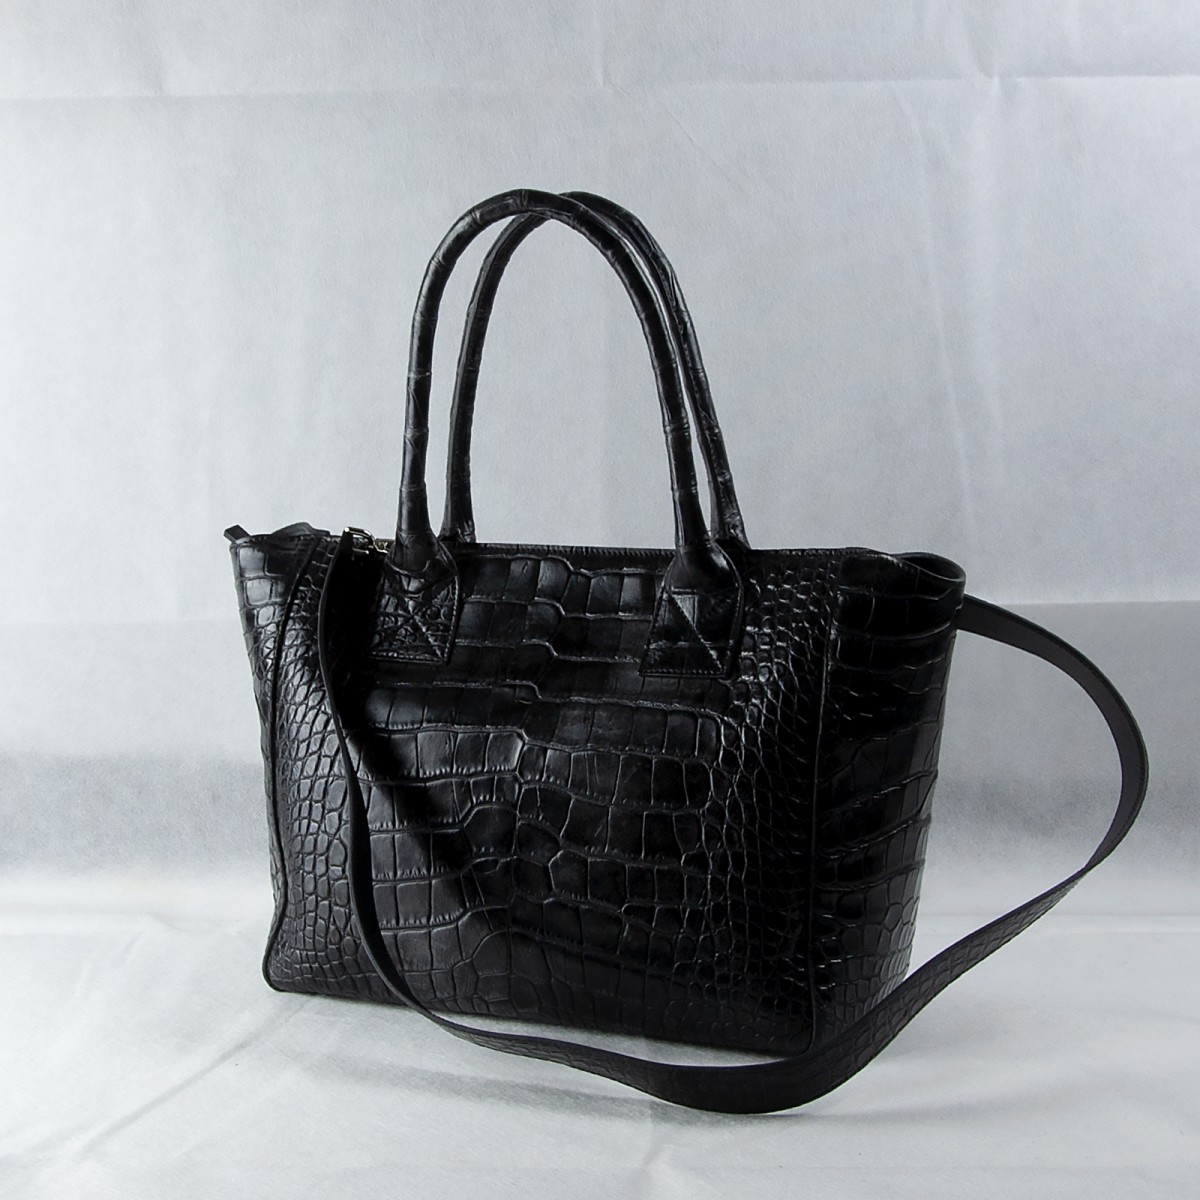 MARIA CROCODILE - Crocodile leather bag, handmade in Italy